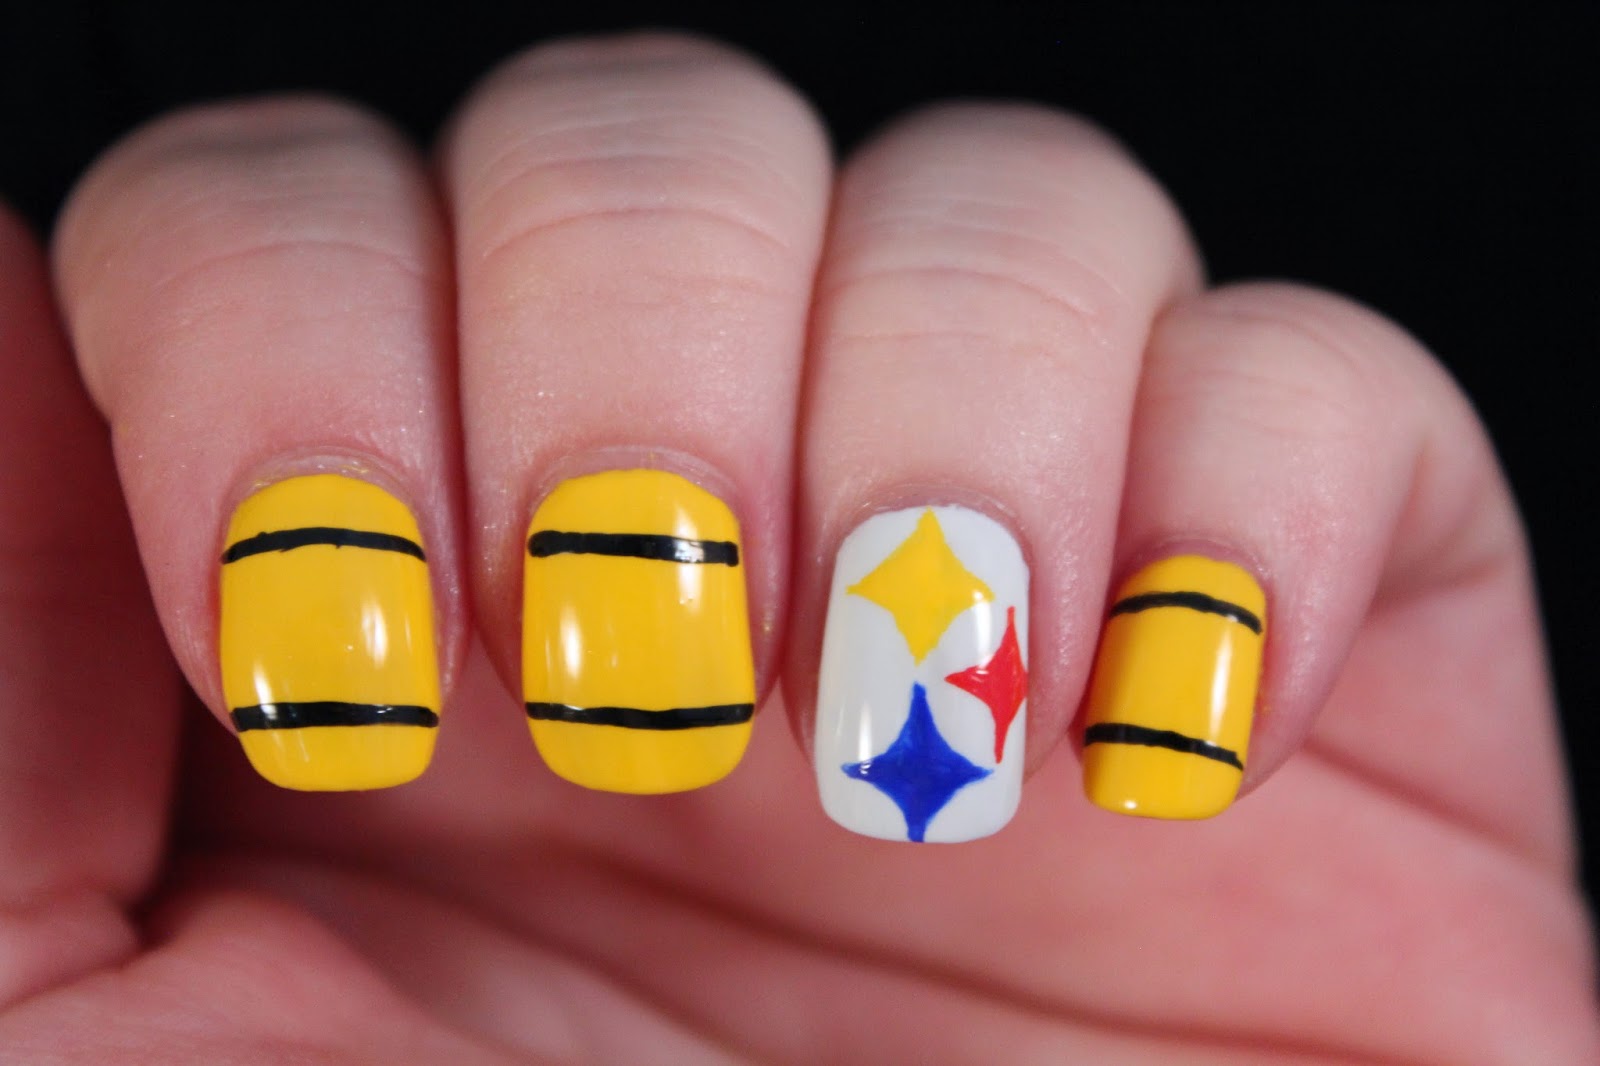 2. Steelers Nail Designs - wide 2